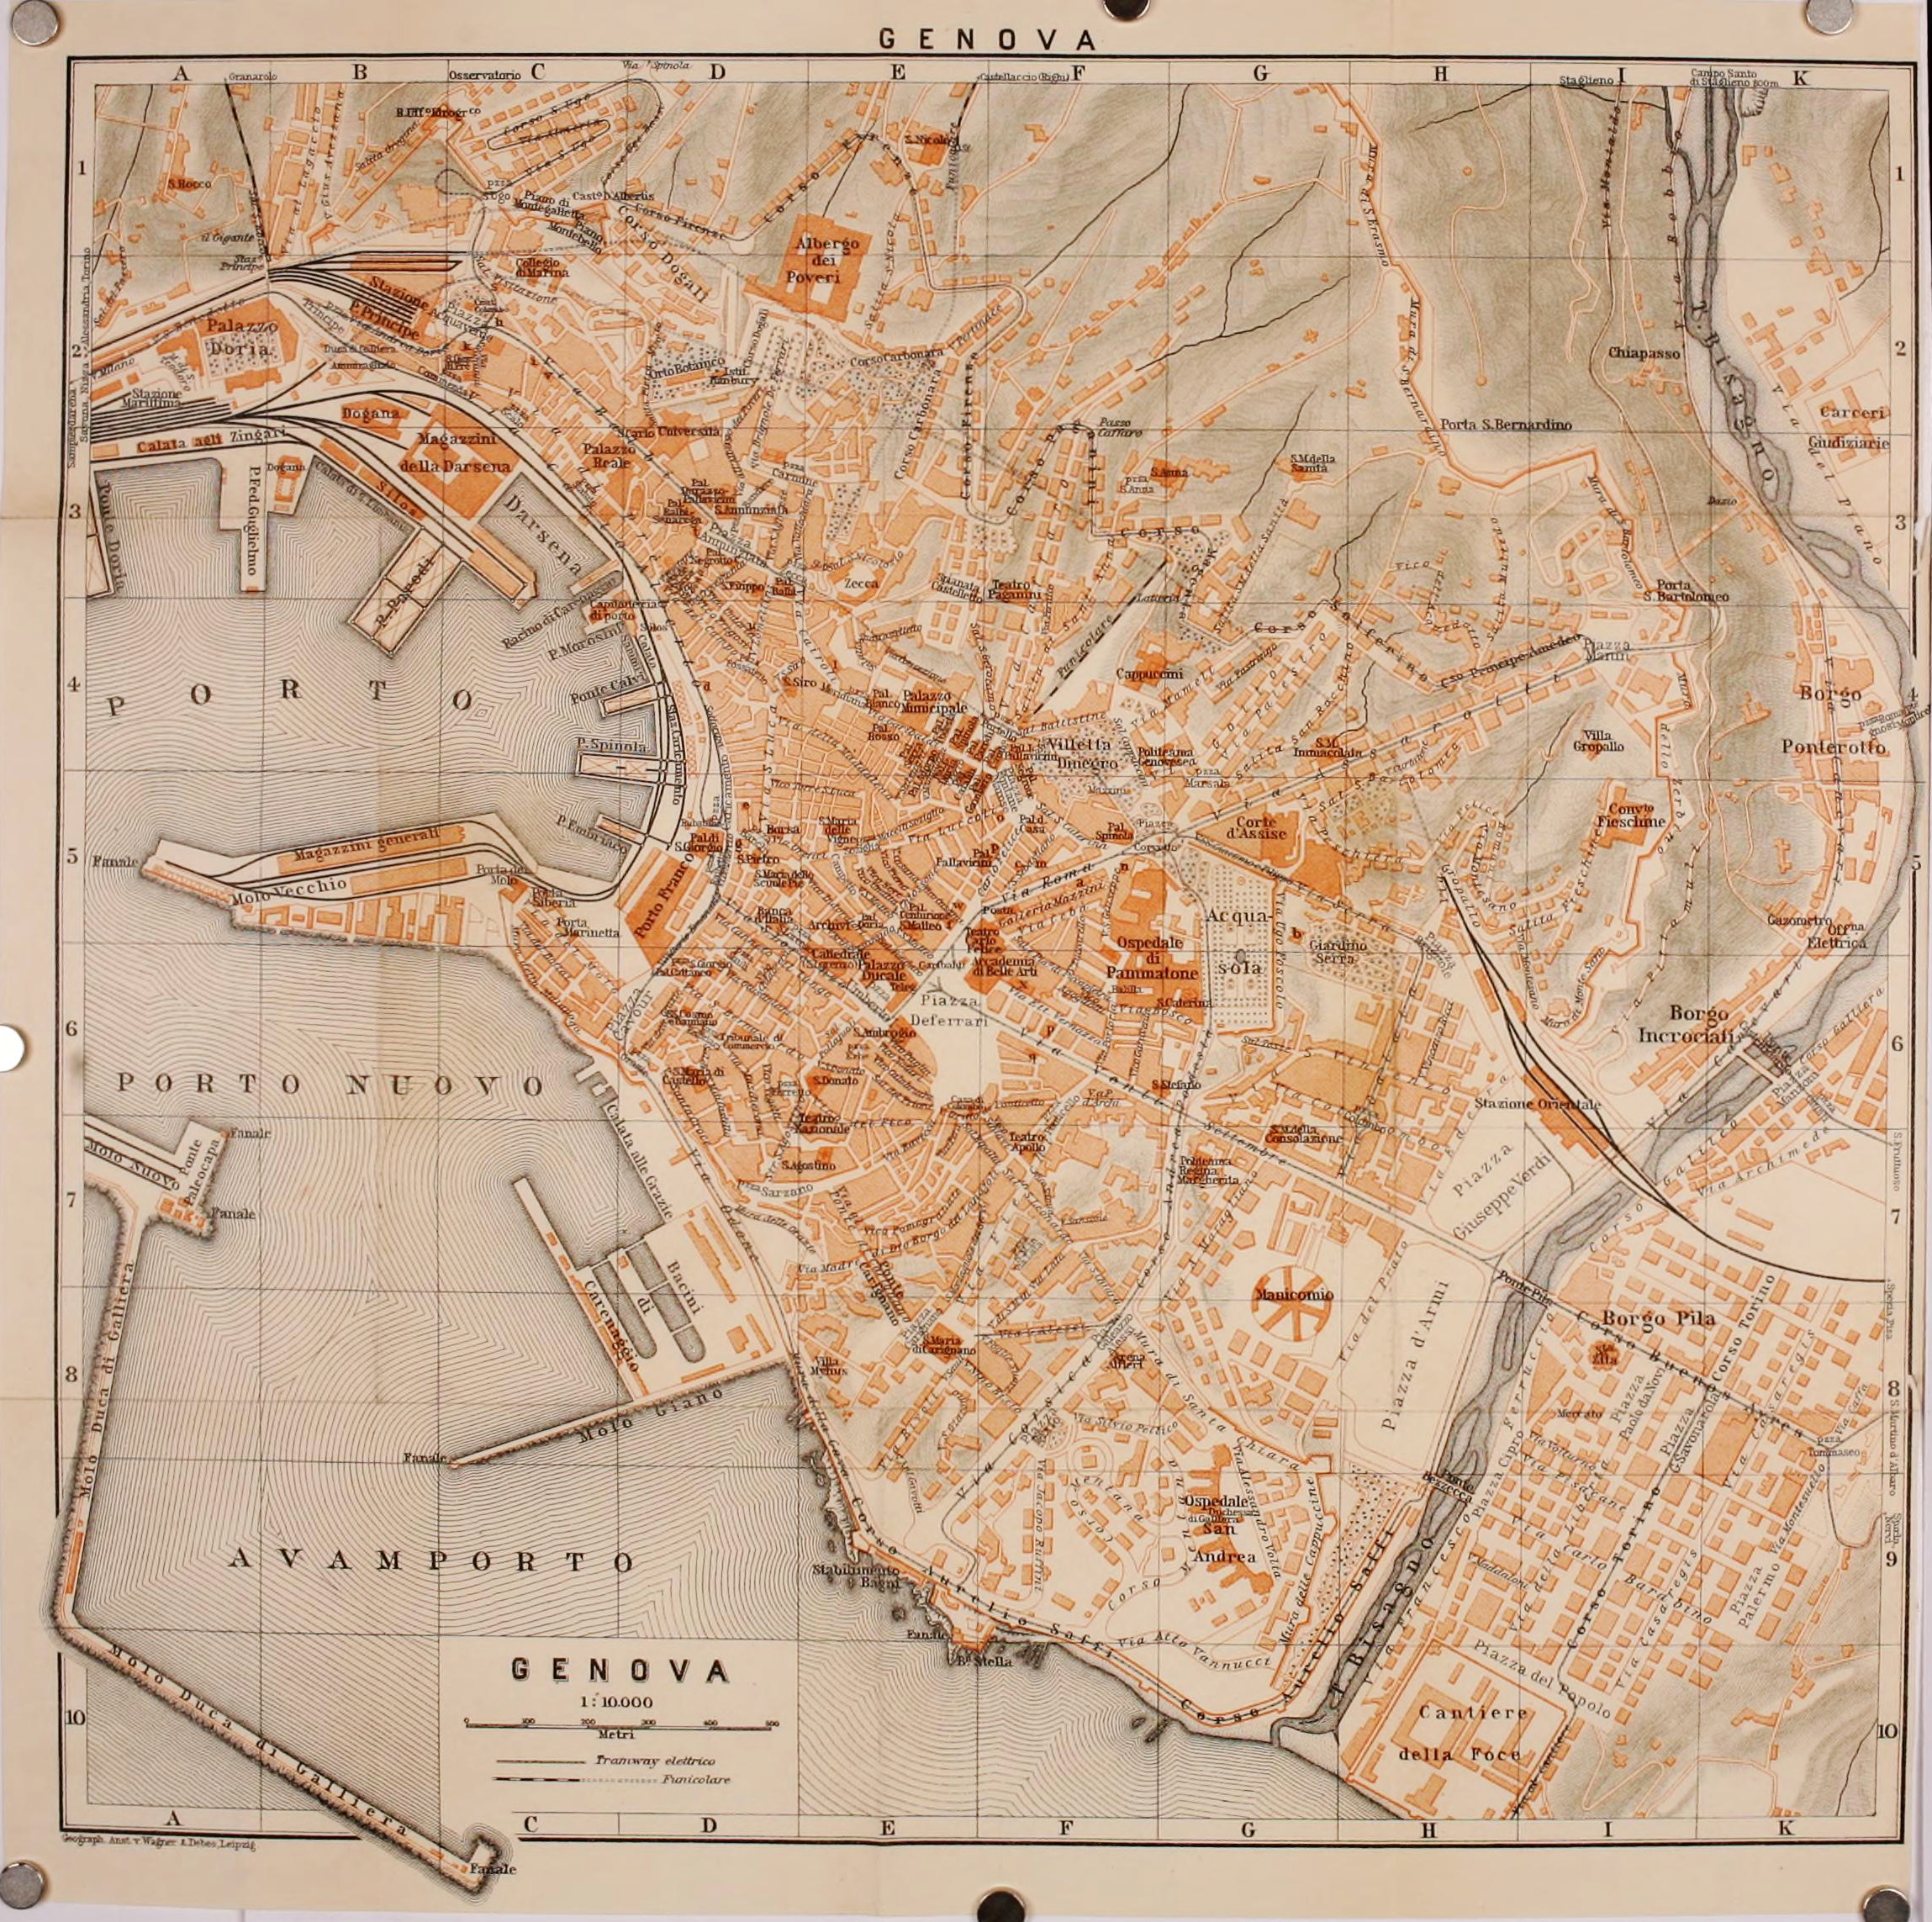 Genoa 1906 - Italy handbook for travellers